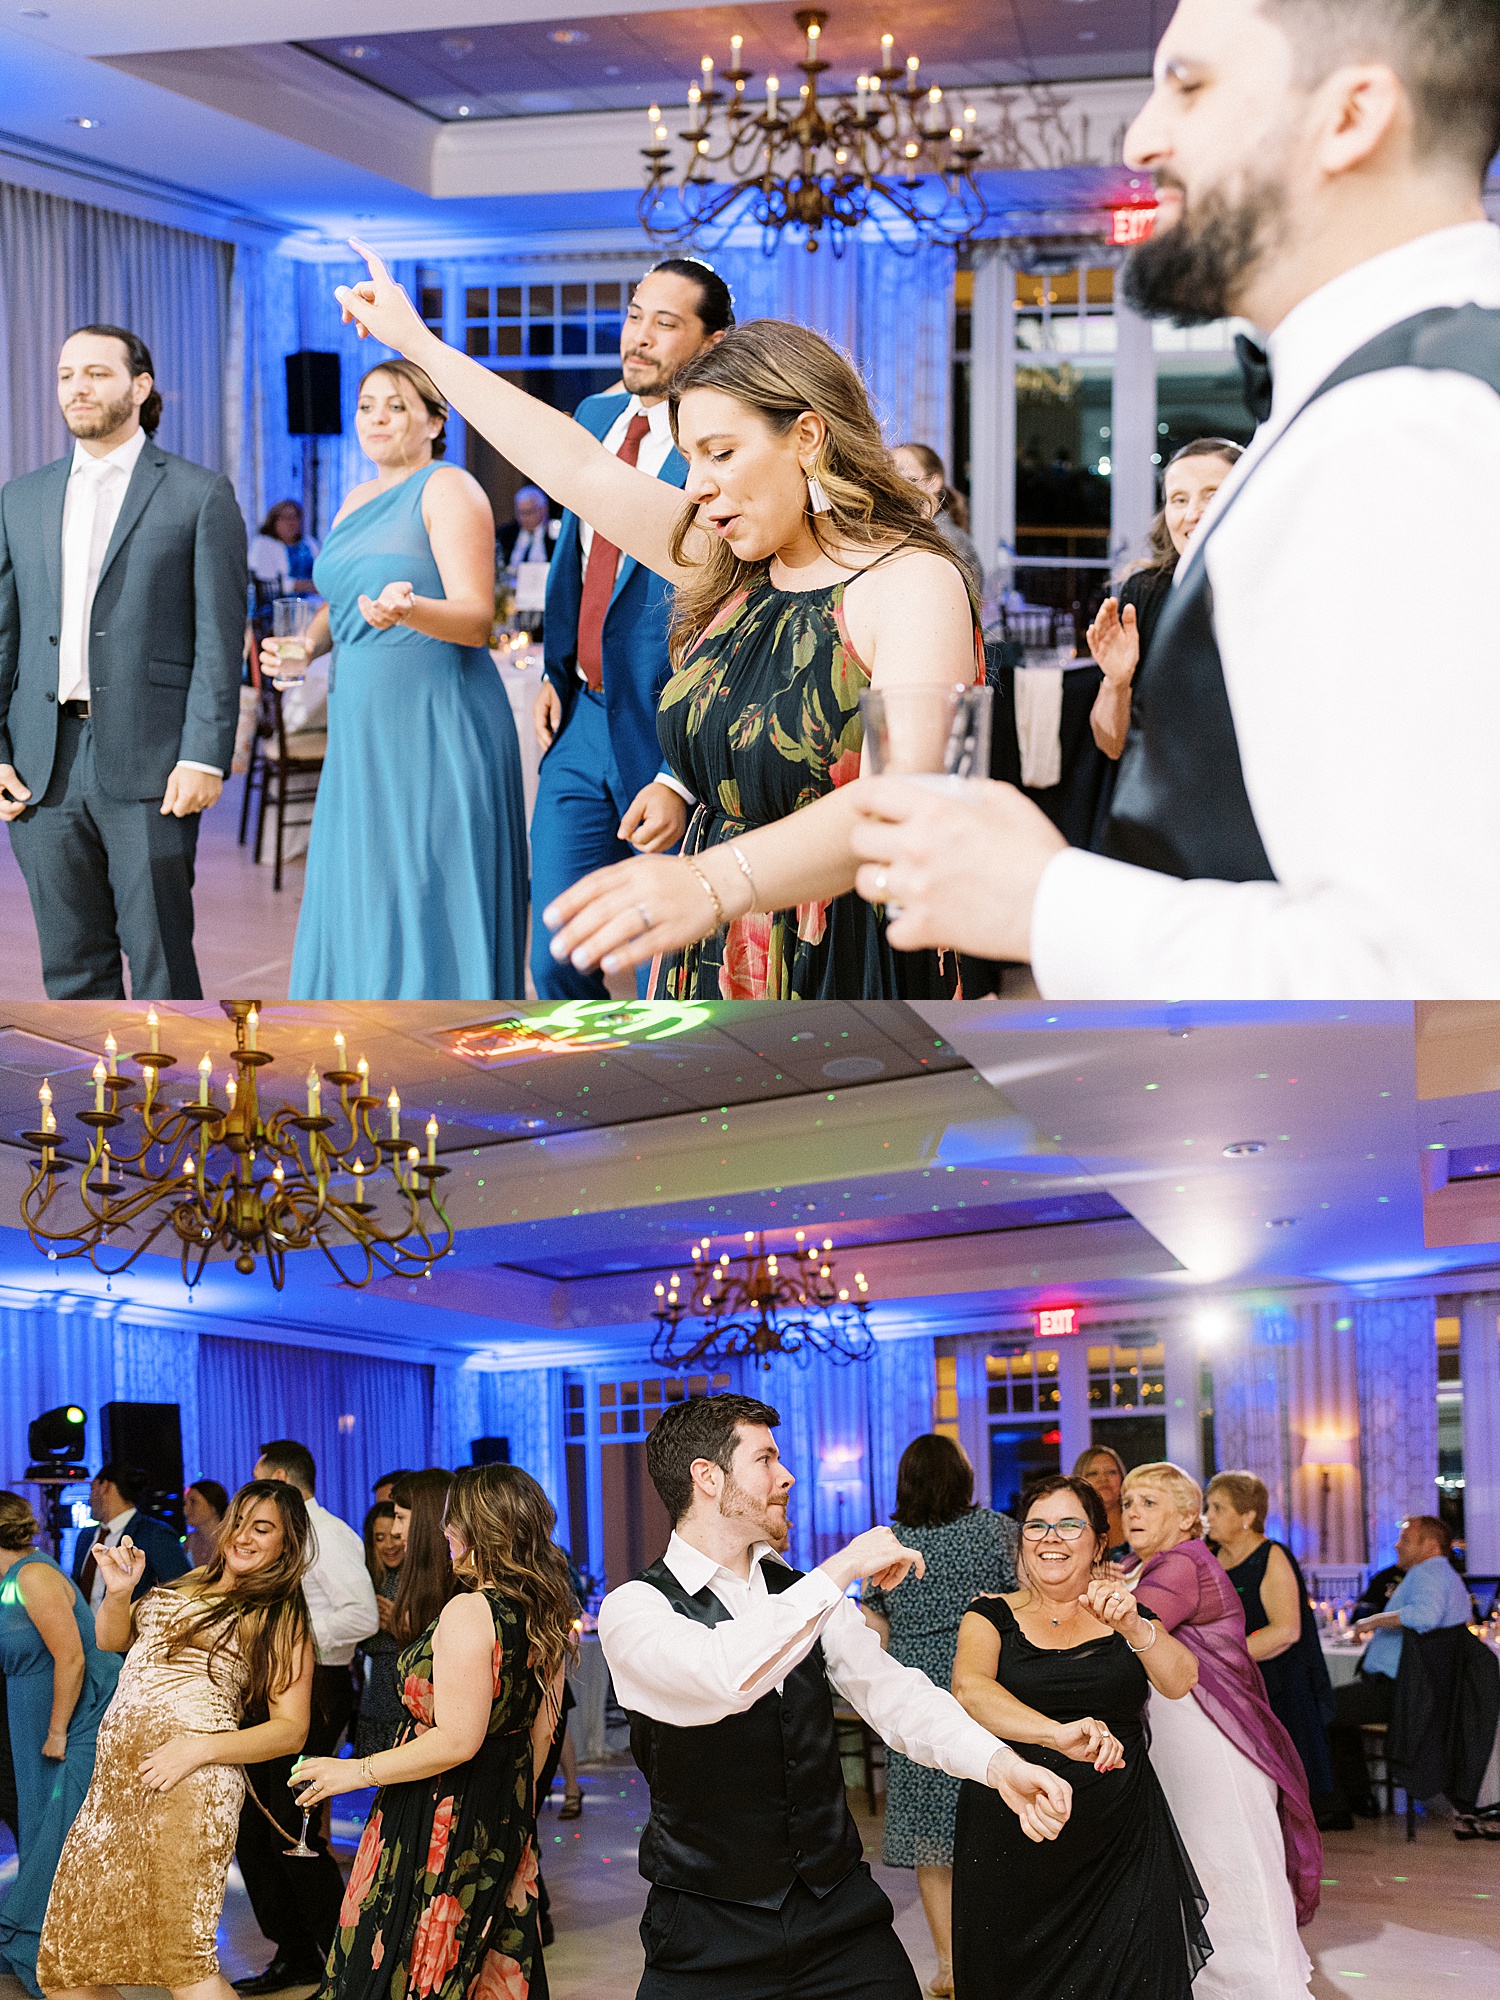 Guests dancing at reception at Beauport Hotel